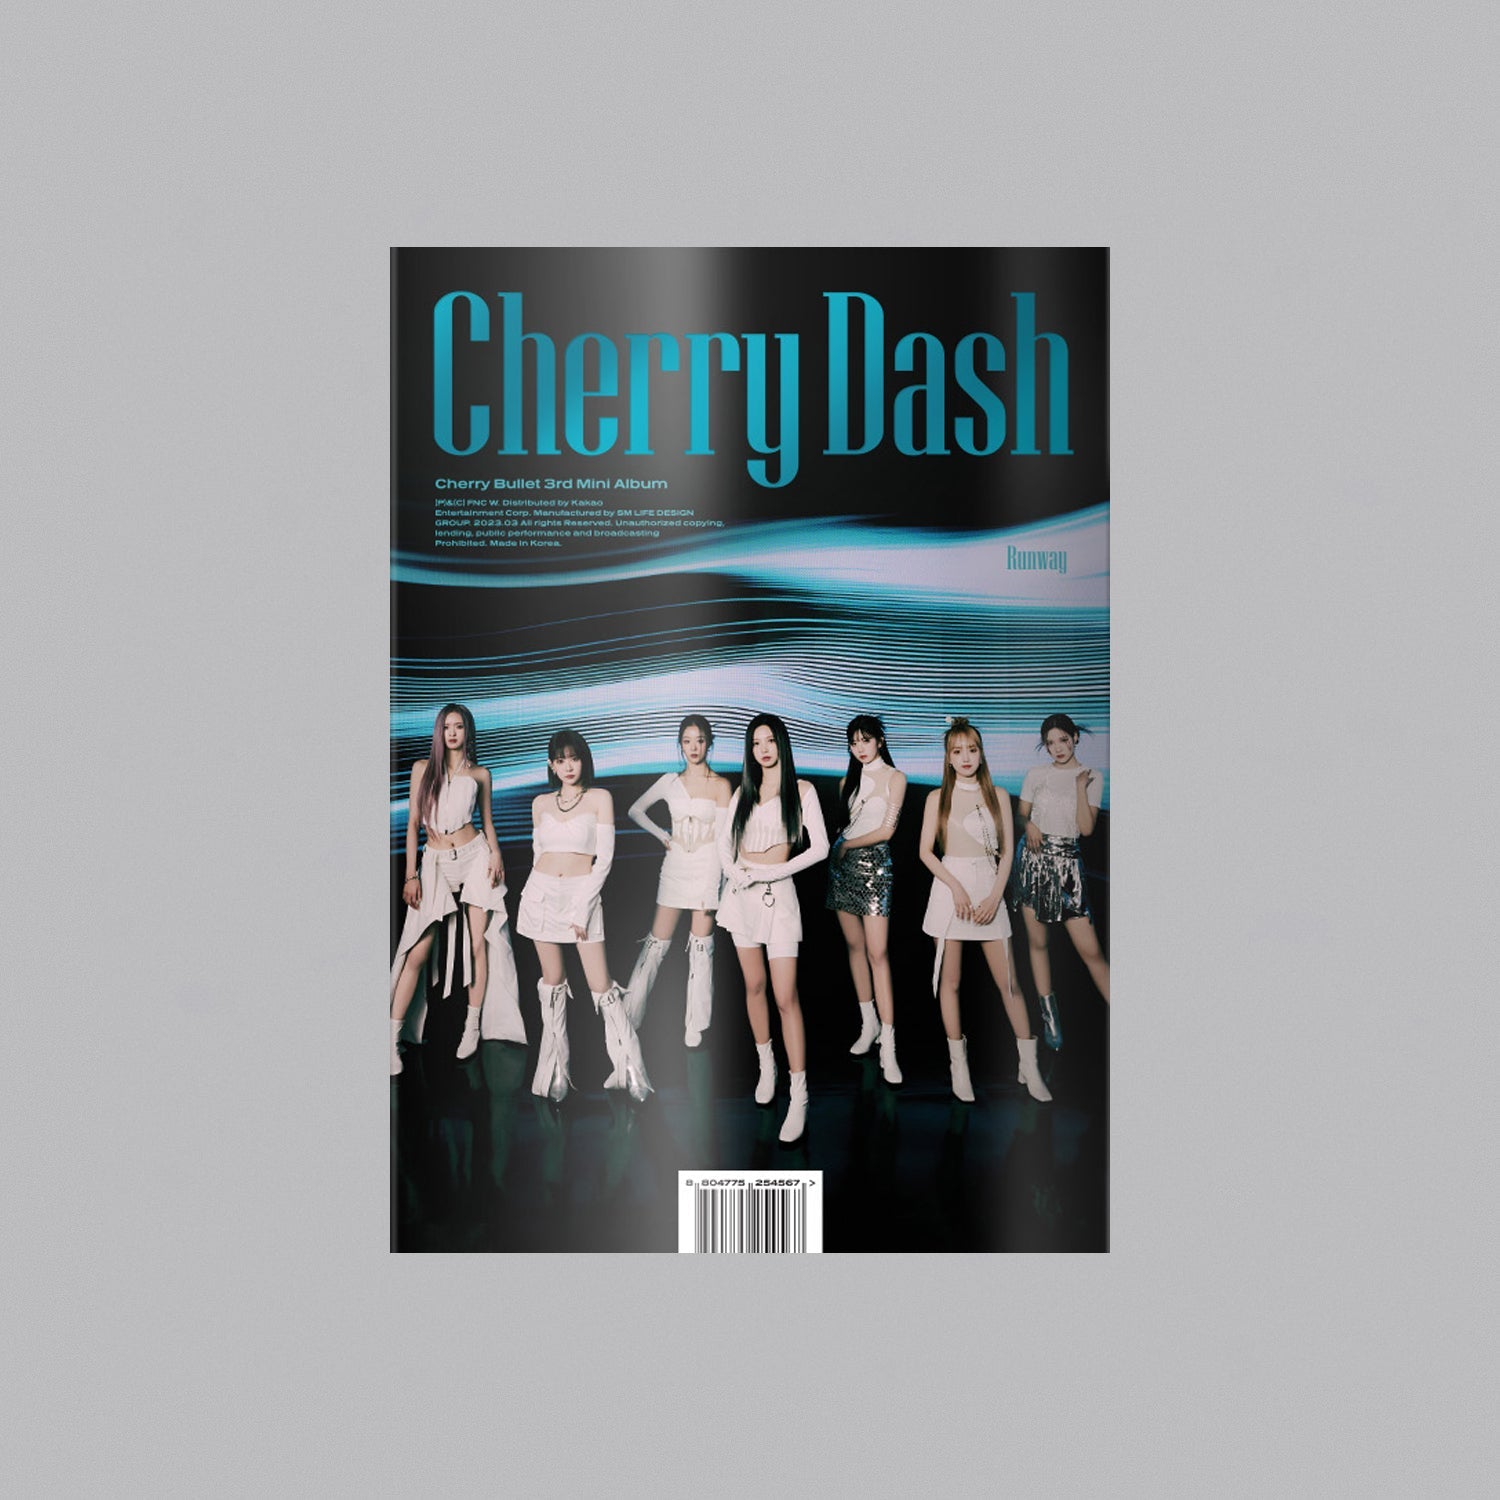 CHERRY BULLET 3RD MINI ALBUM 'CHERRY DASH' RUNWAY VERSION COVER